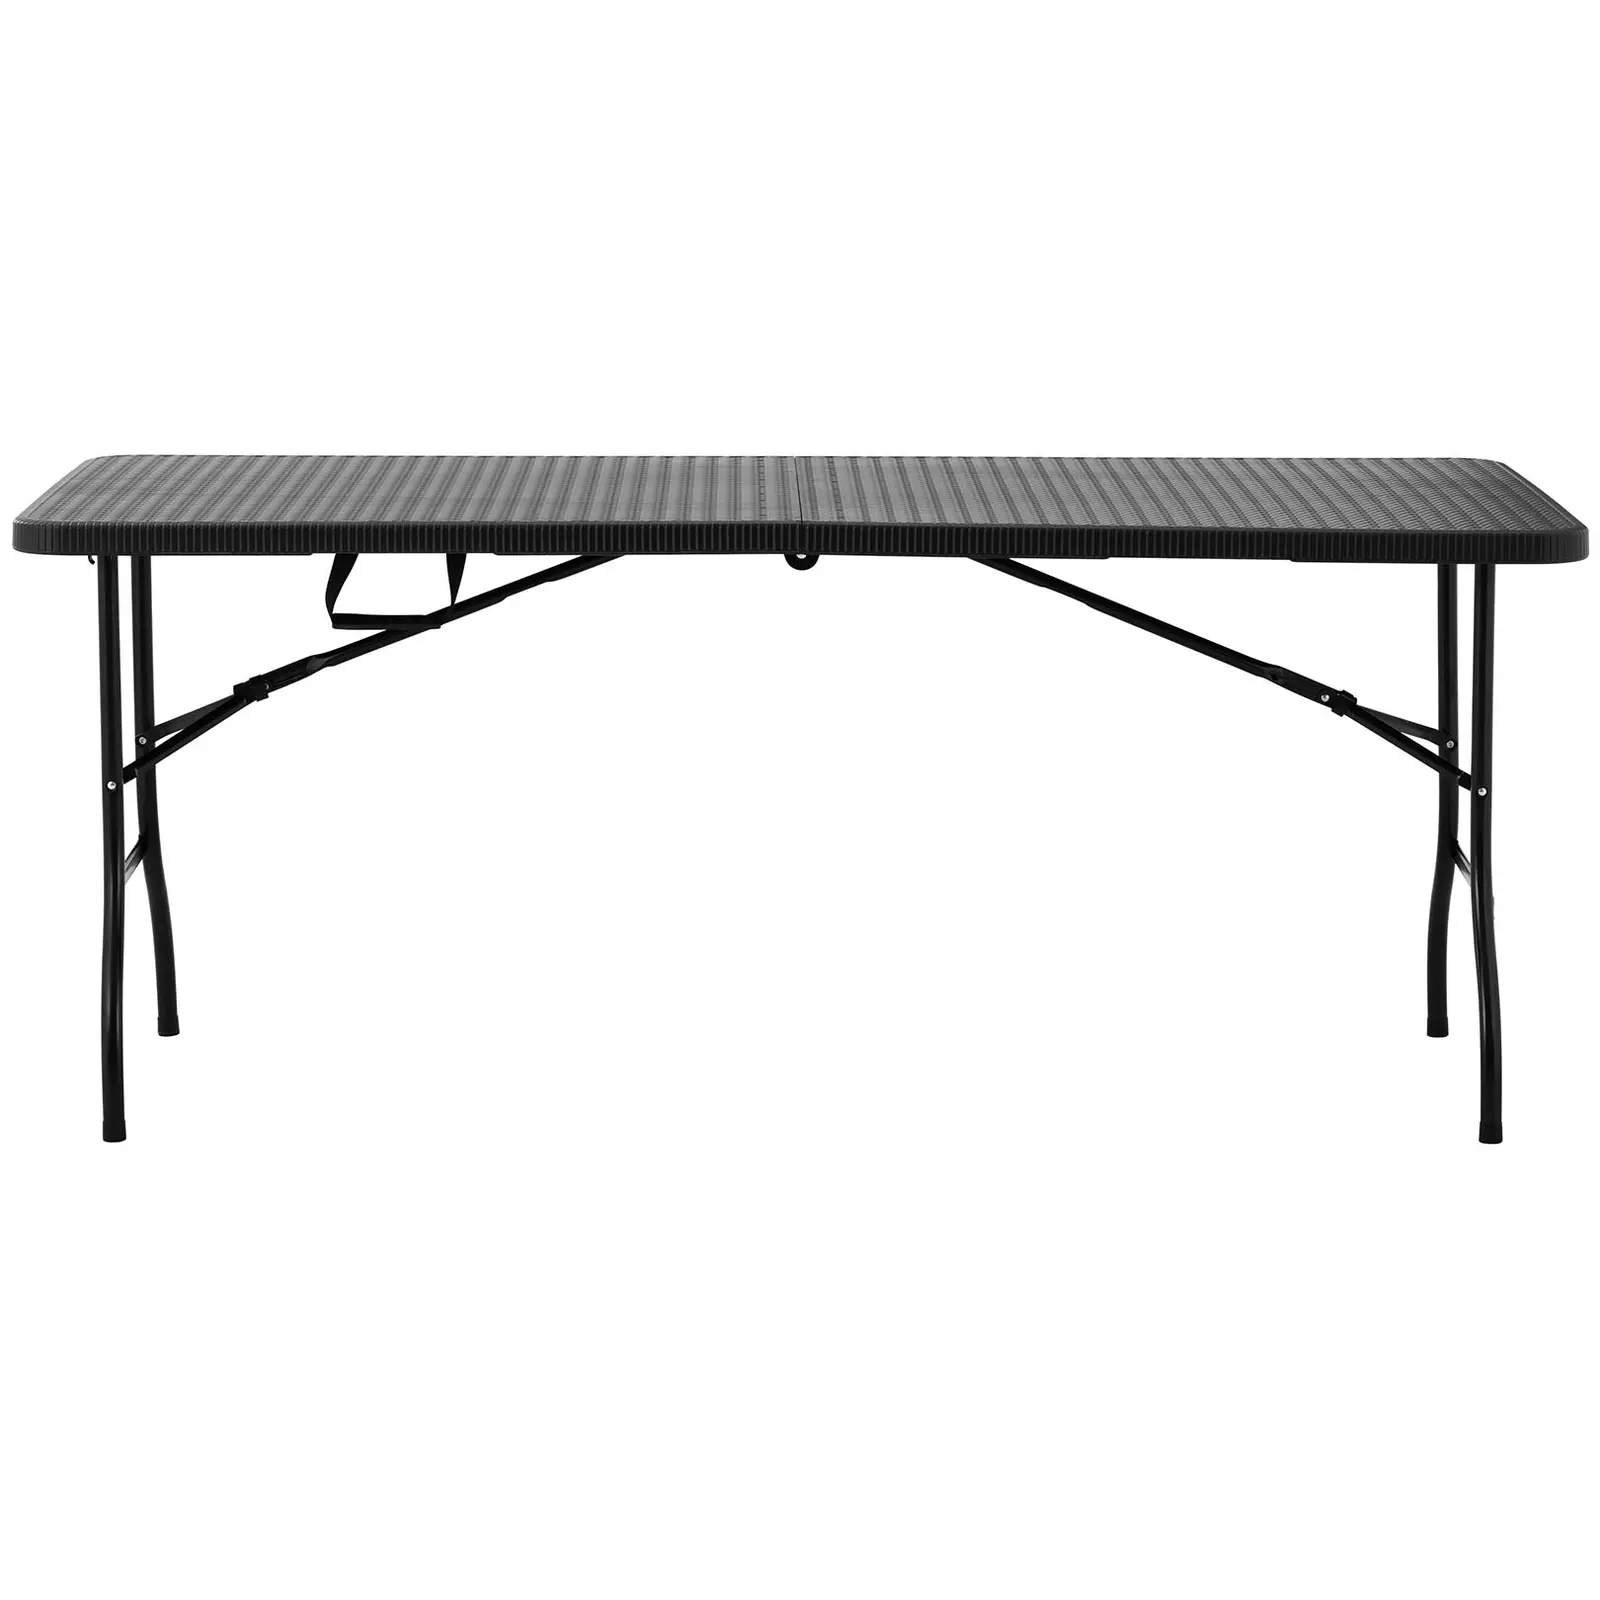 Folding Table - 1,830 x 750 x 740 mm - Royal Catering - 150 kg - inside/outside - Black